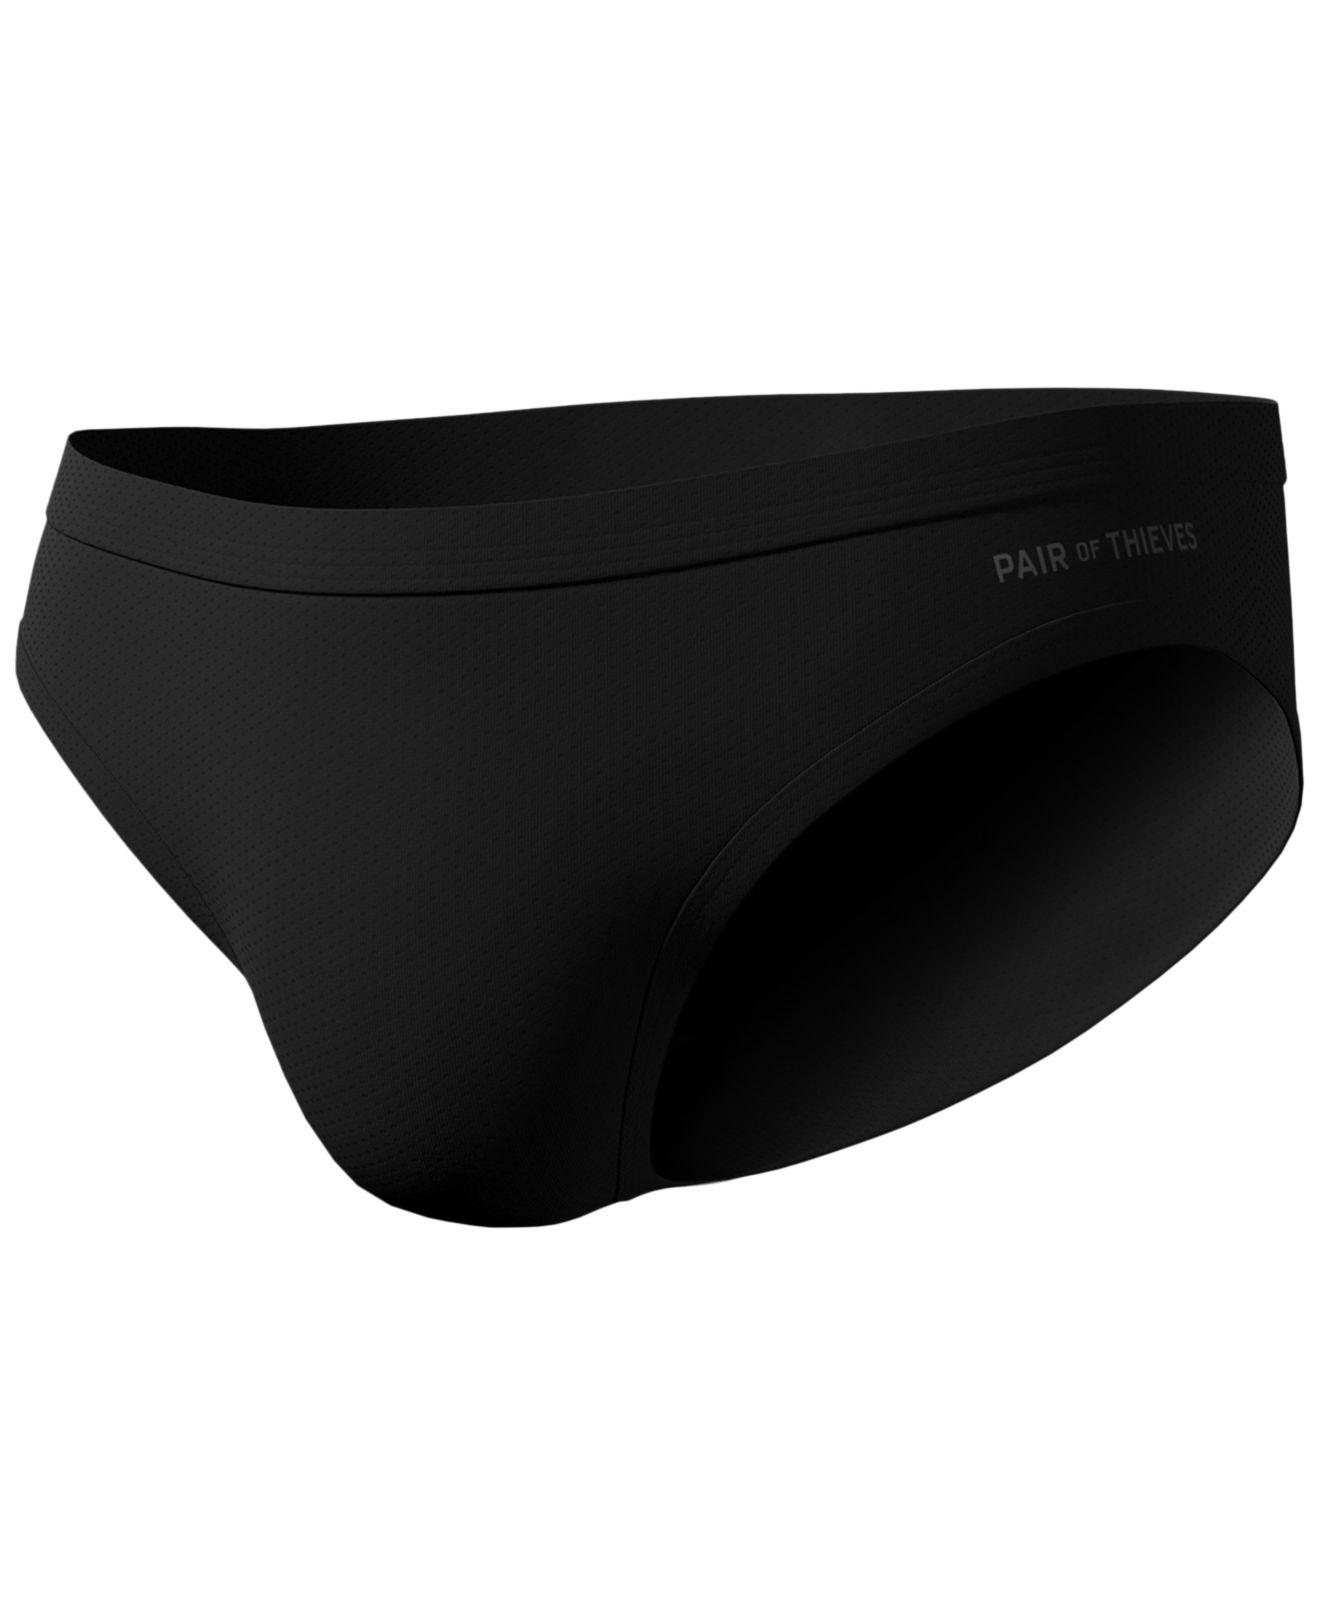 Pair of Thieves Super-fit Assorted Bikini Briefs, 3-pack in Black